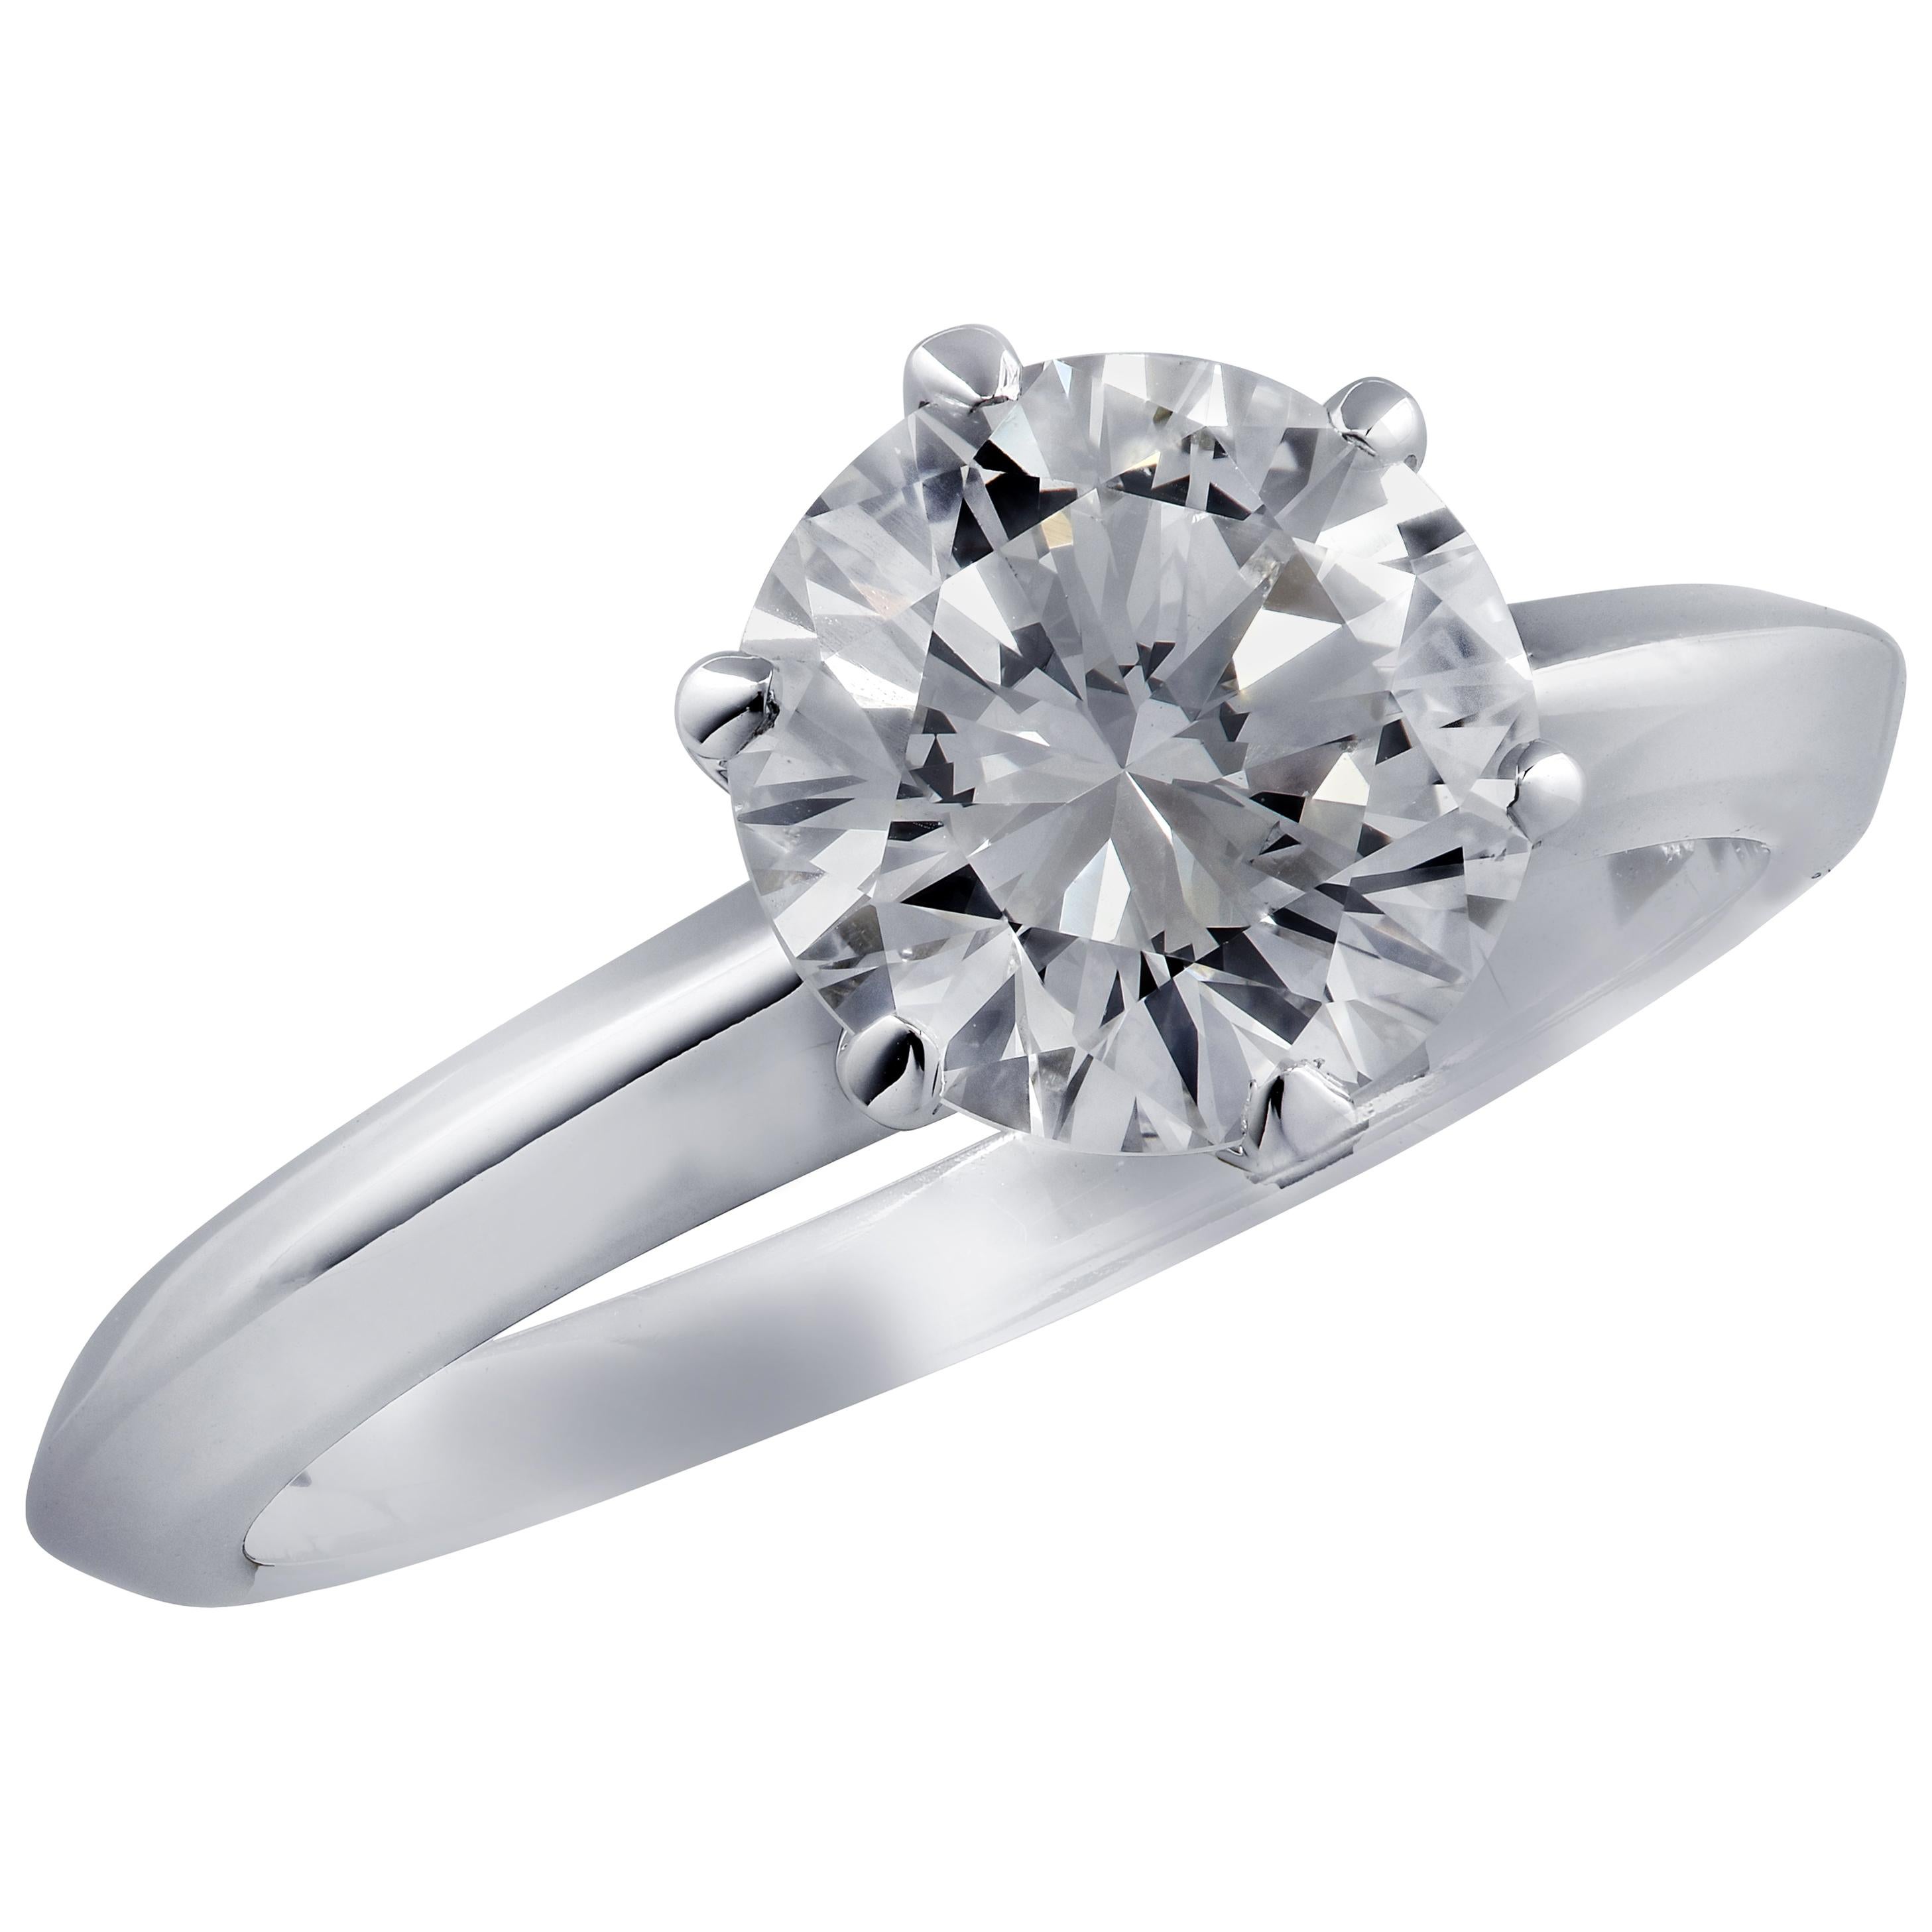 Vivid Diamonds GIA Certified 1.43 Carat Diamond Engagement Ring